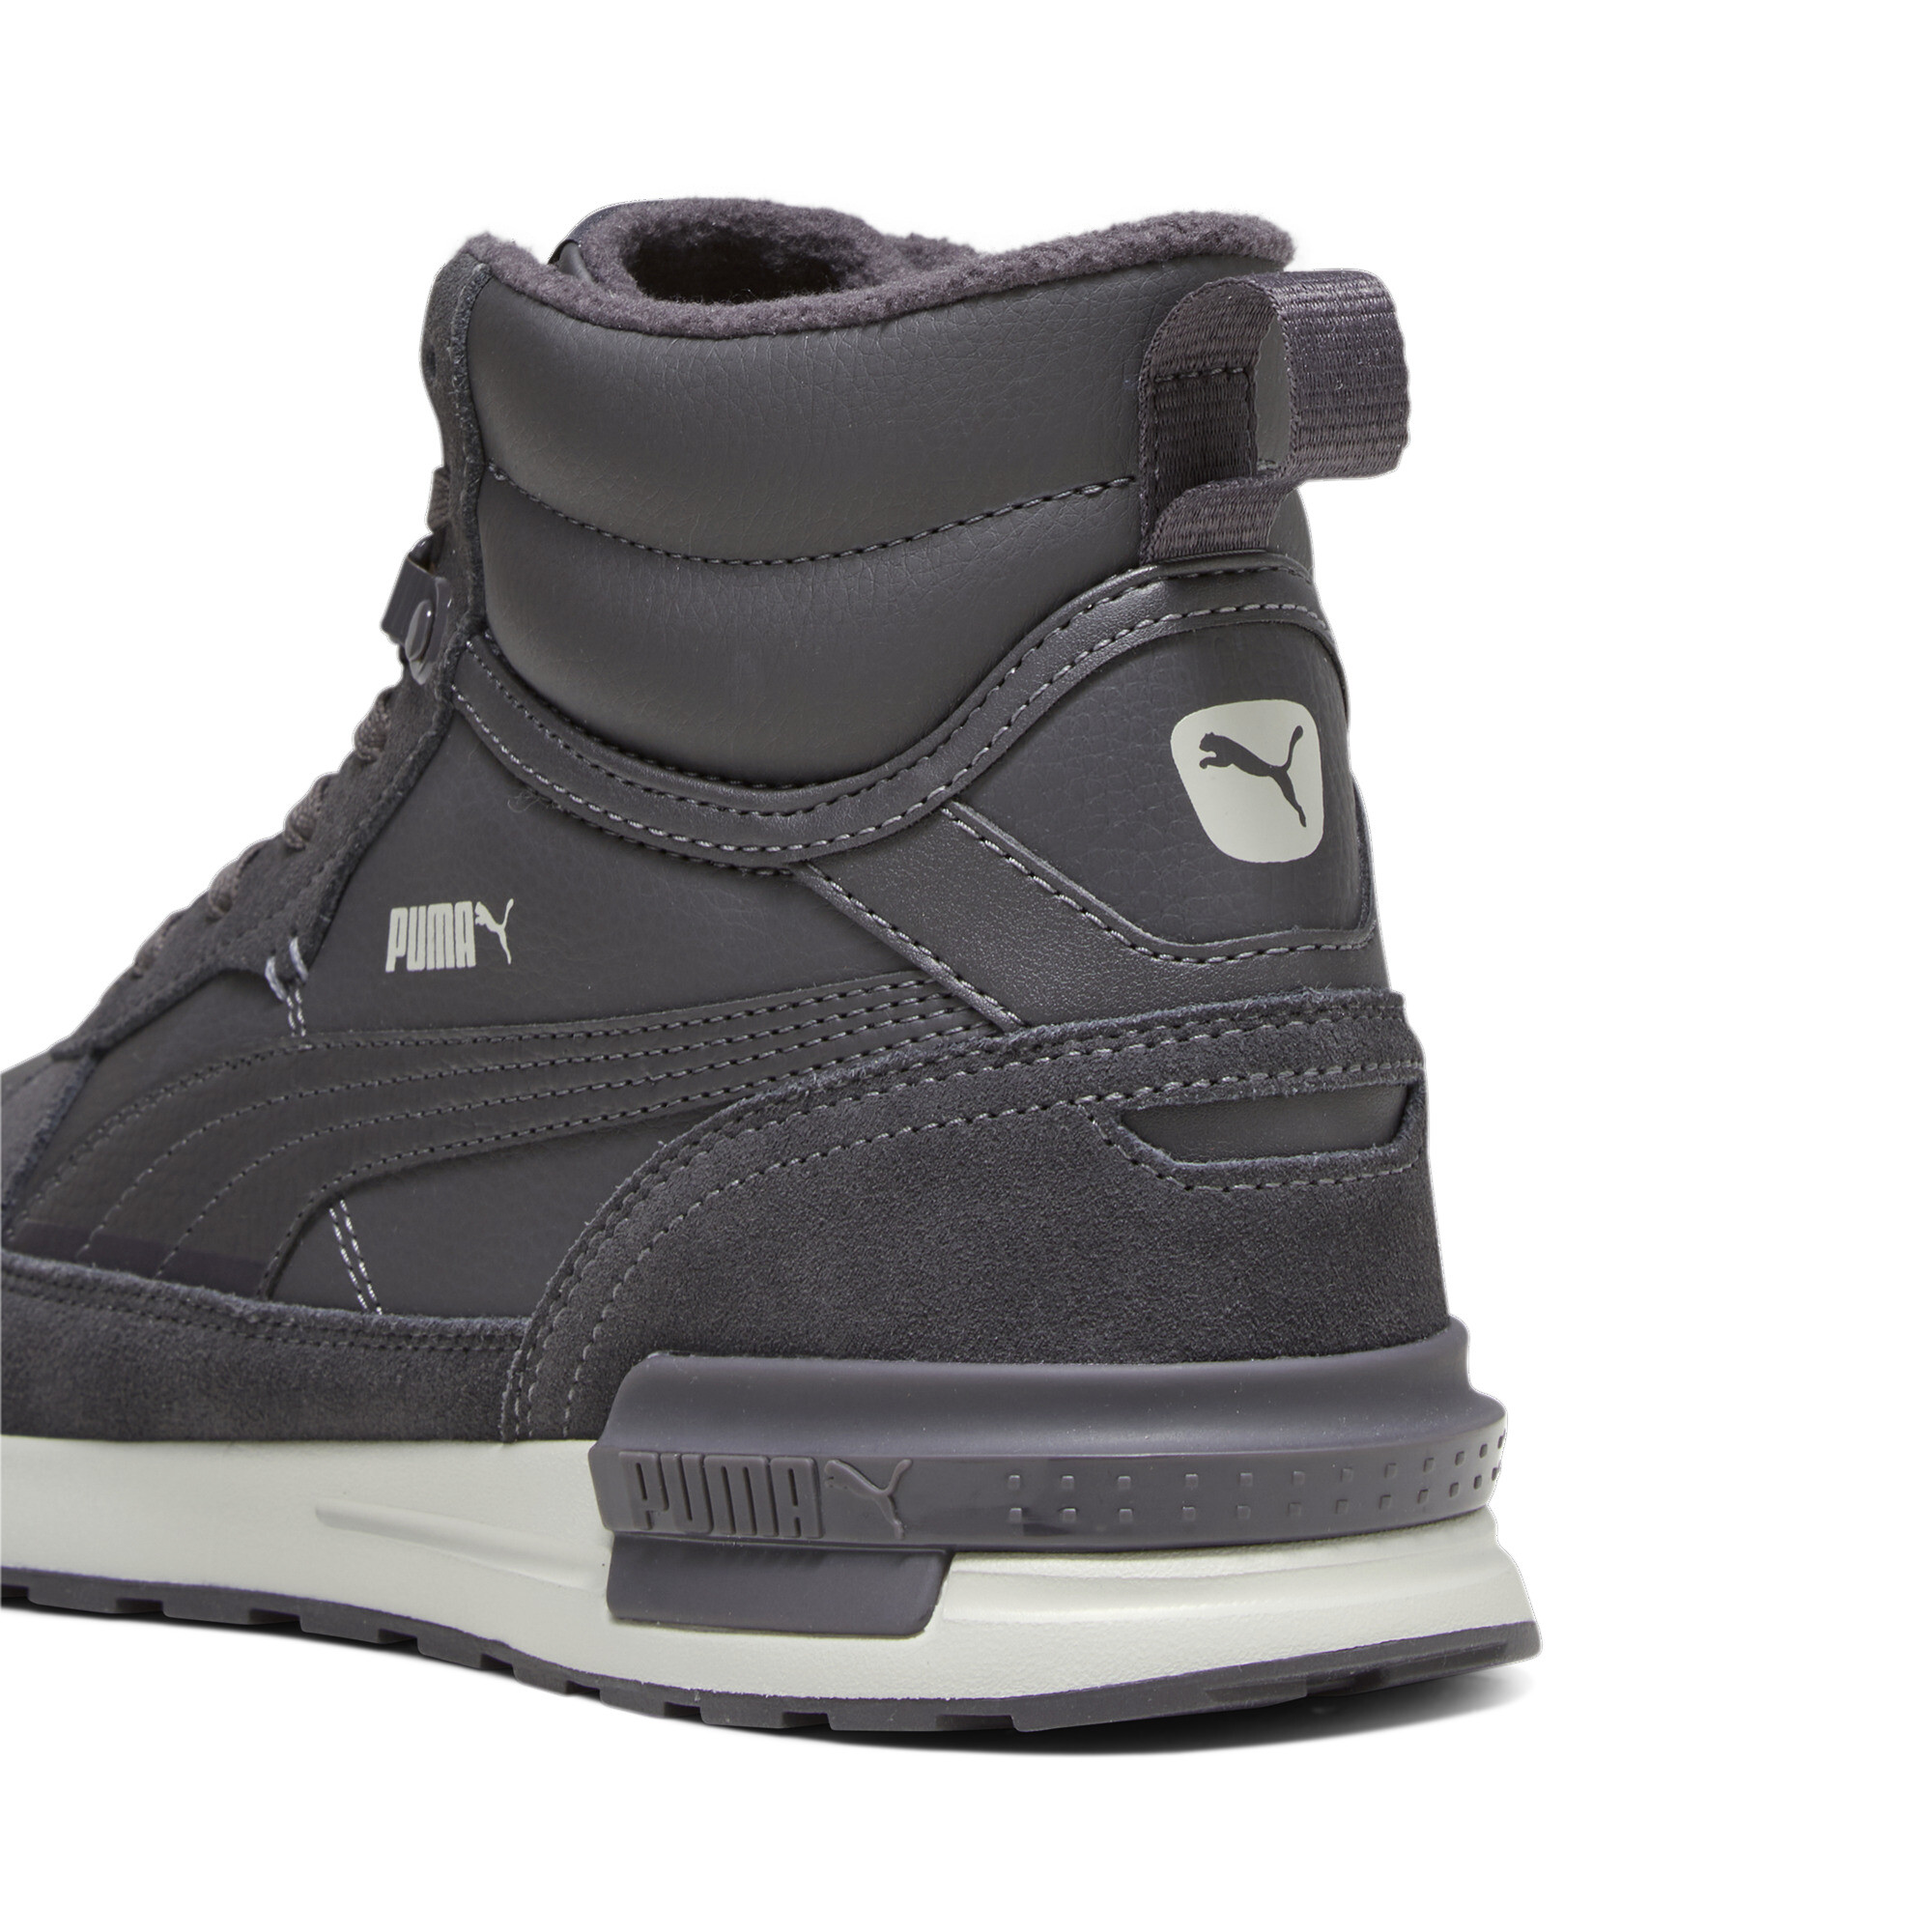 Men's Puma Graviton Mid Sneakers, Gray, Size 42.5, Shoes